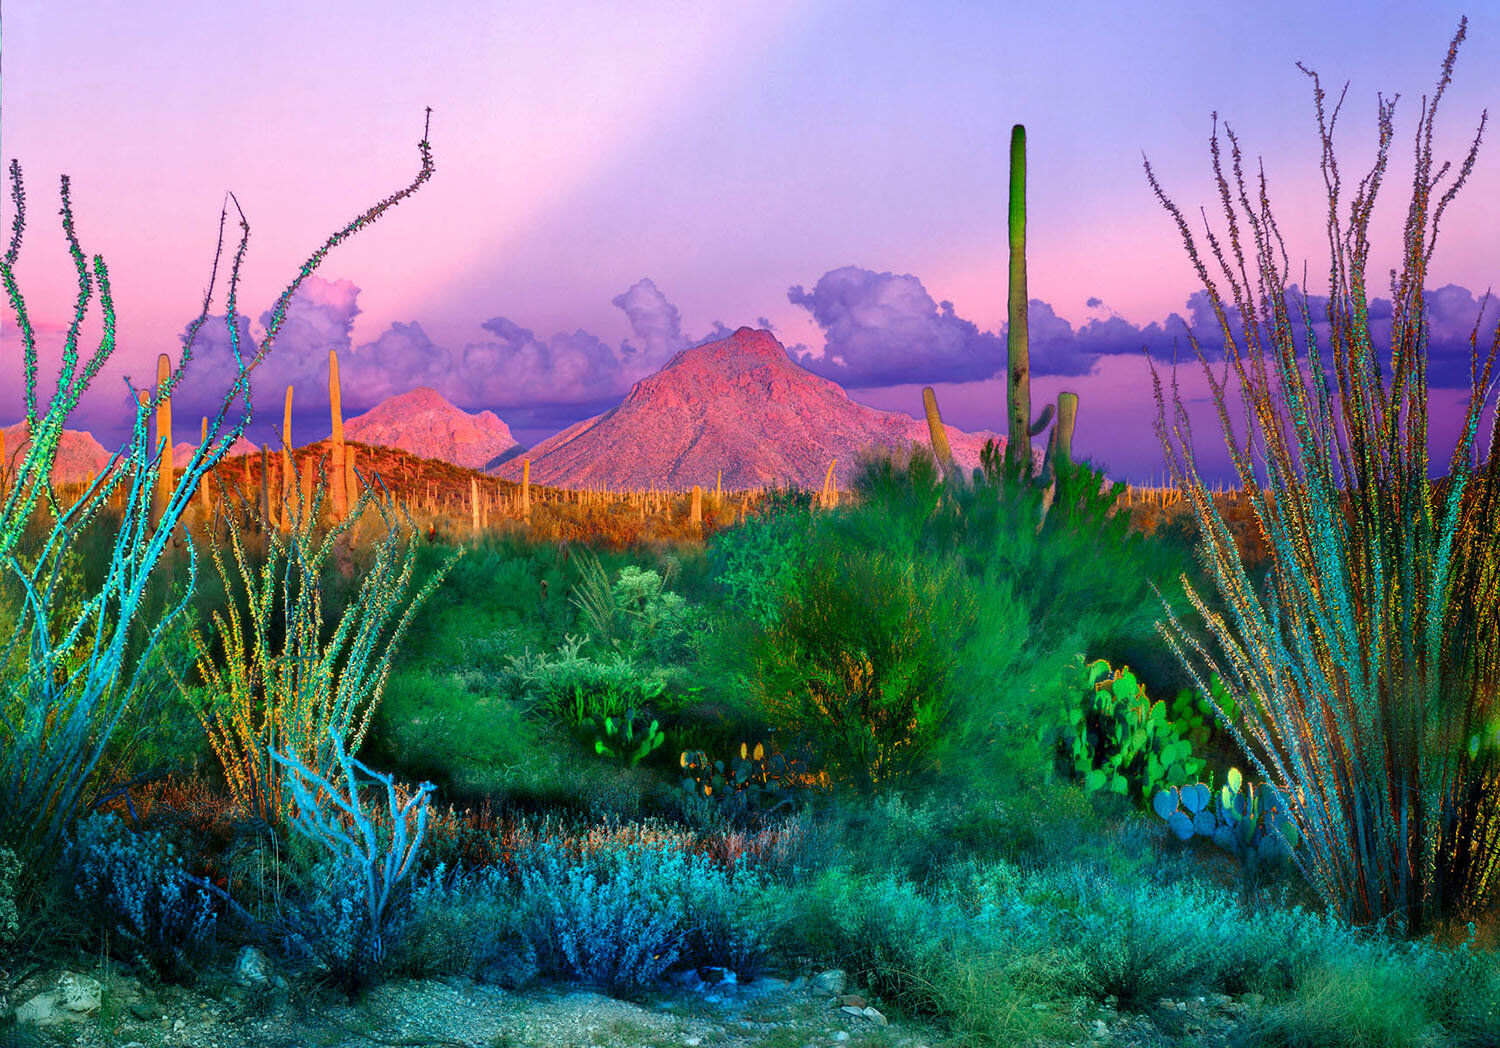 Afternoon, Sunset, Night and Desert Dawn, Tucson Mountains, AZ